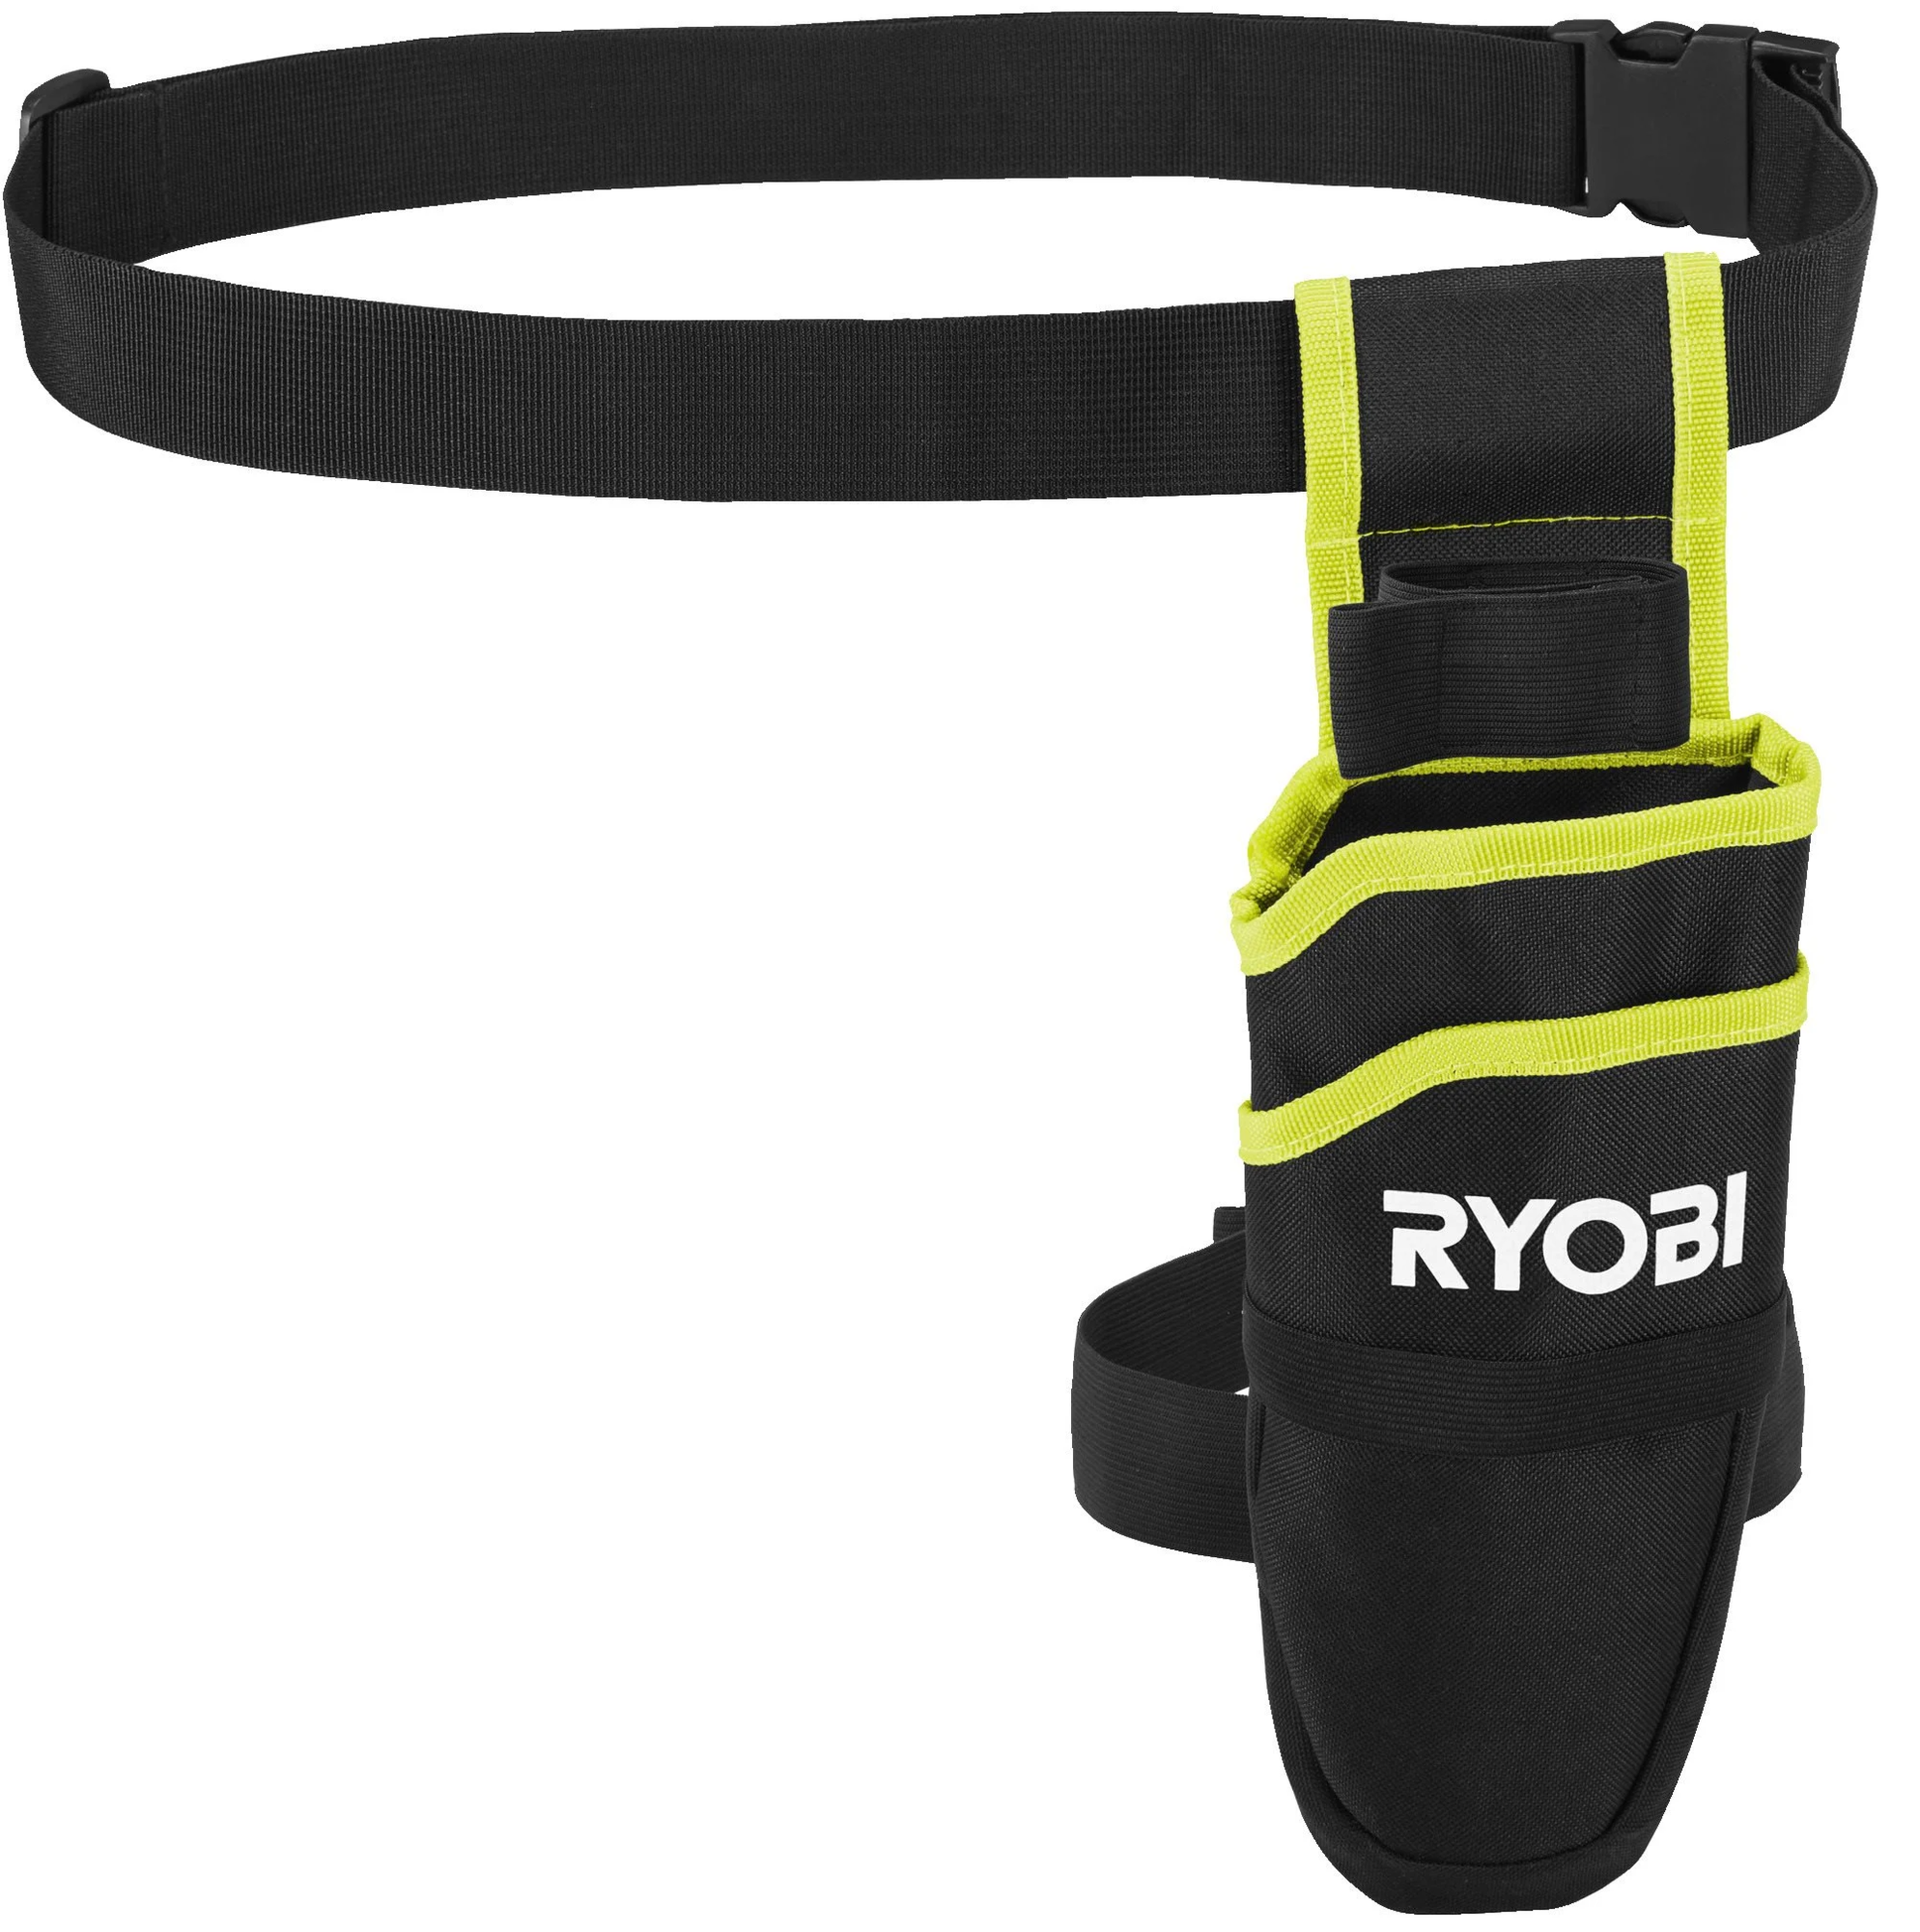 RYOBI One+ RY18SCA specifications